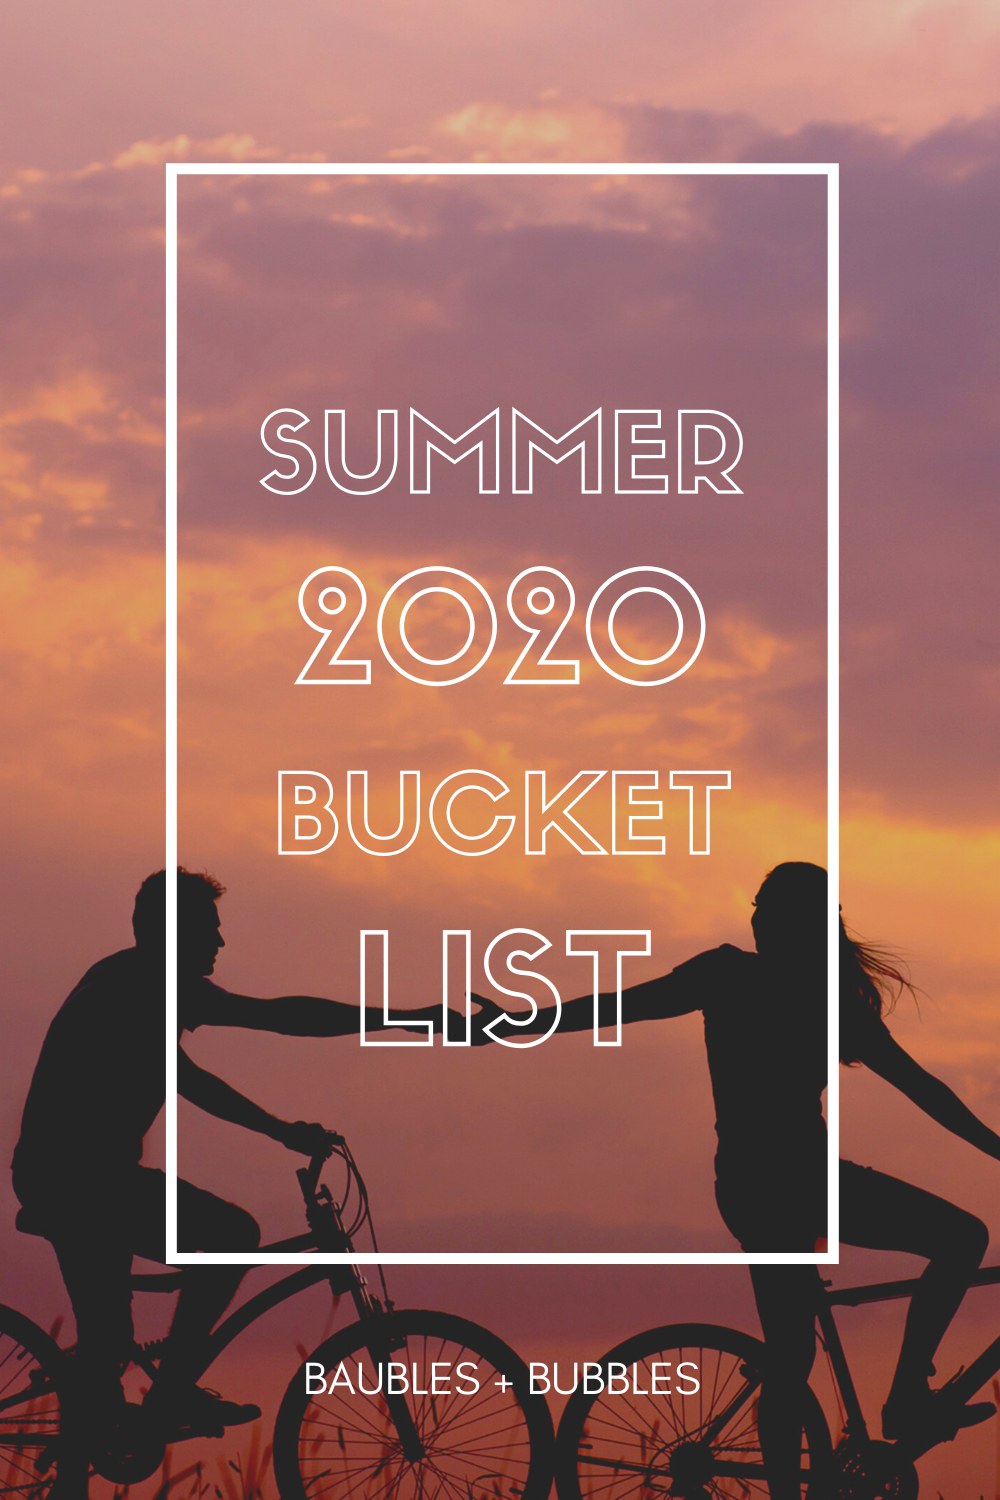 Summer 2020 Bucket List - Baubles + Bubbles